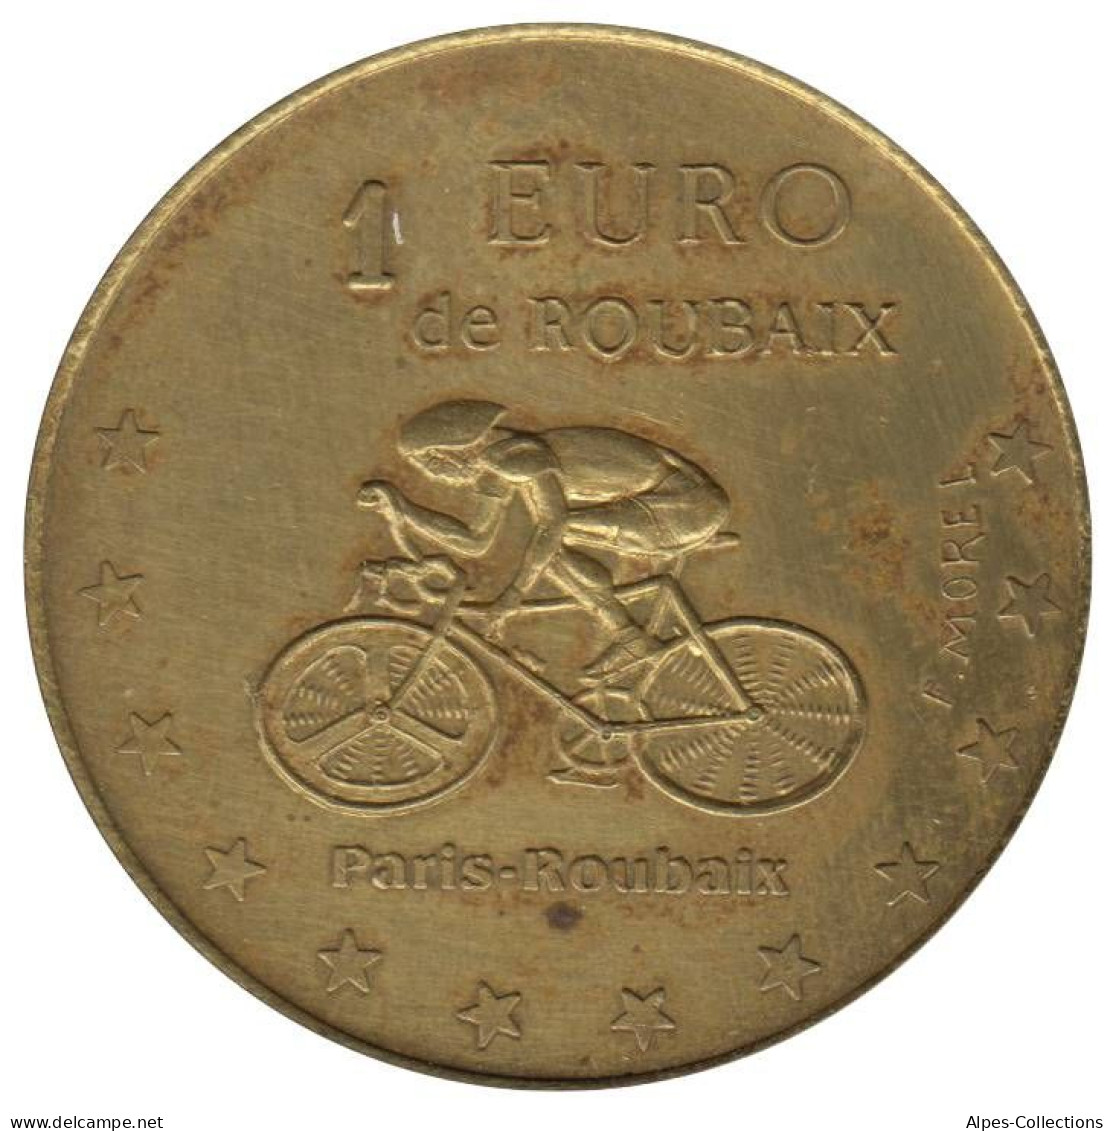 ROUBAIX - EU0010.1 - 1 EURO DES VILLES - Réf: NR - 1998 - Euros Of The Cities